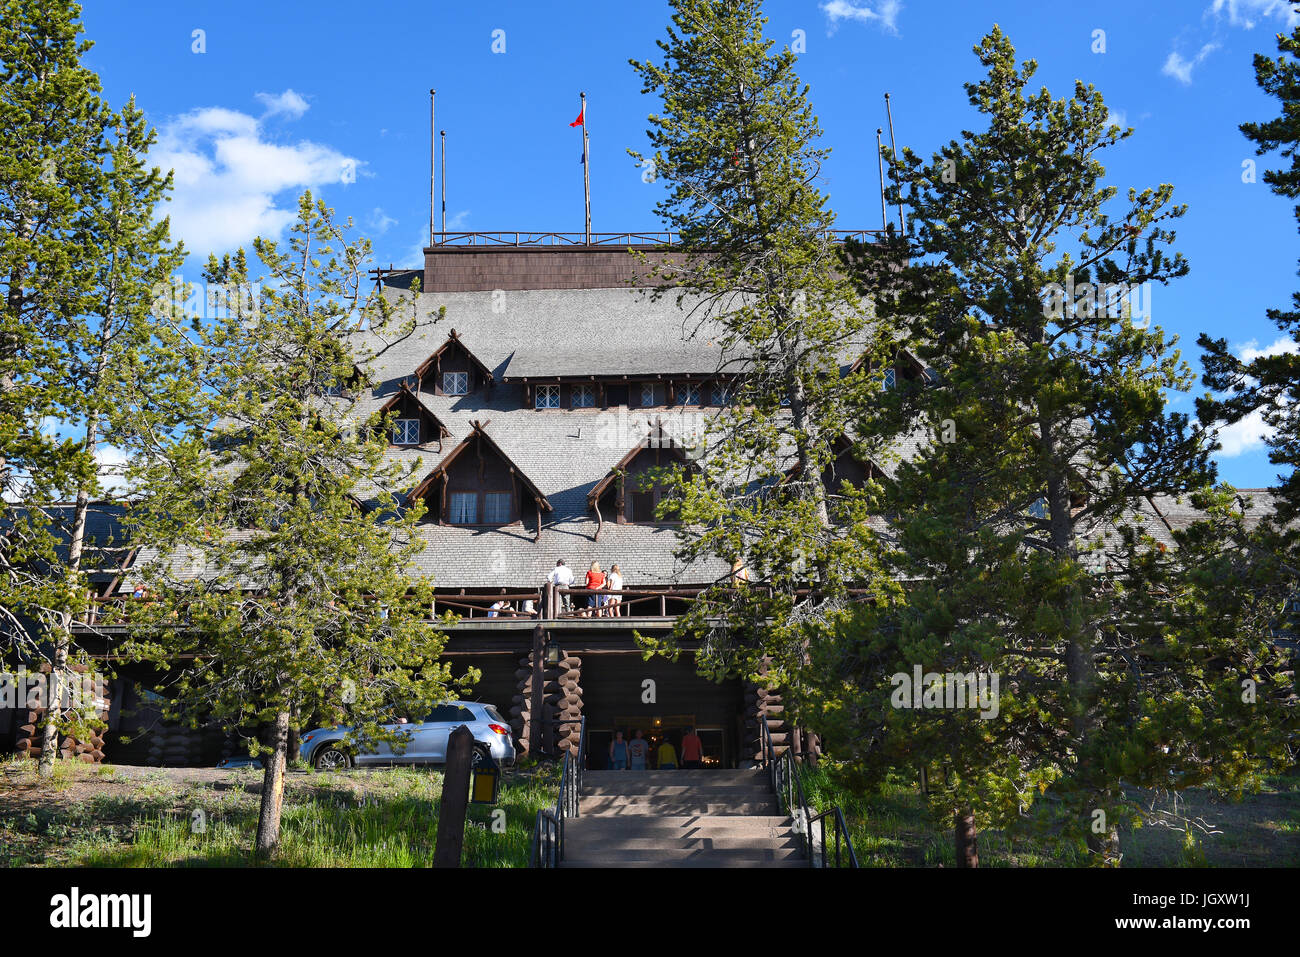 El Parque Nacional Yellowstone, Wyoming - Junio 25, 21017: Old Faithful Inn. Uno de los más famosos e históricos hoteles en Yellowstone comenzó acogedor gue Foto de stock